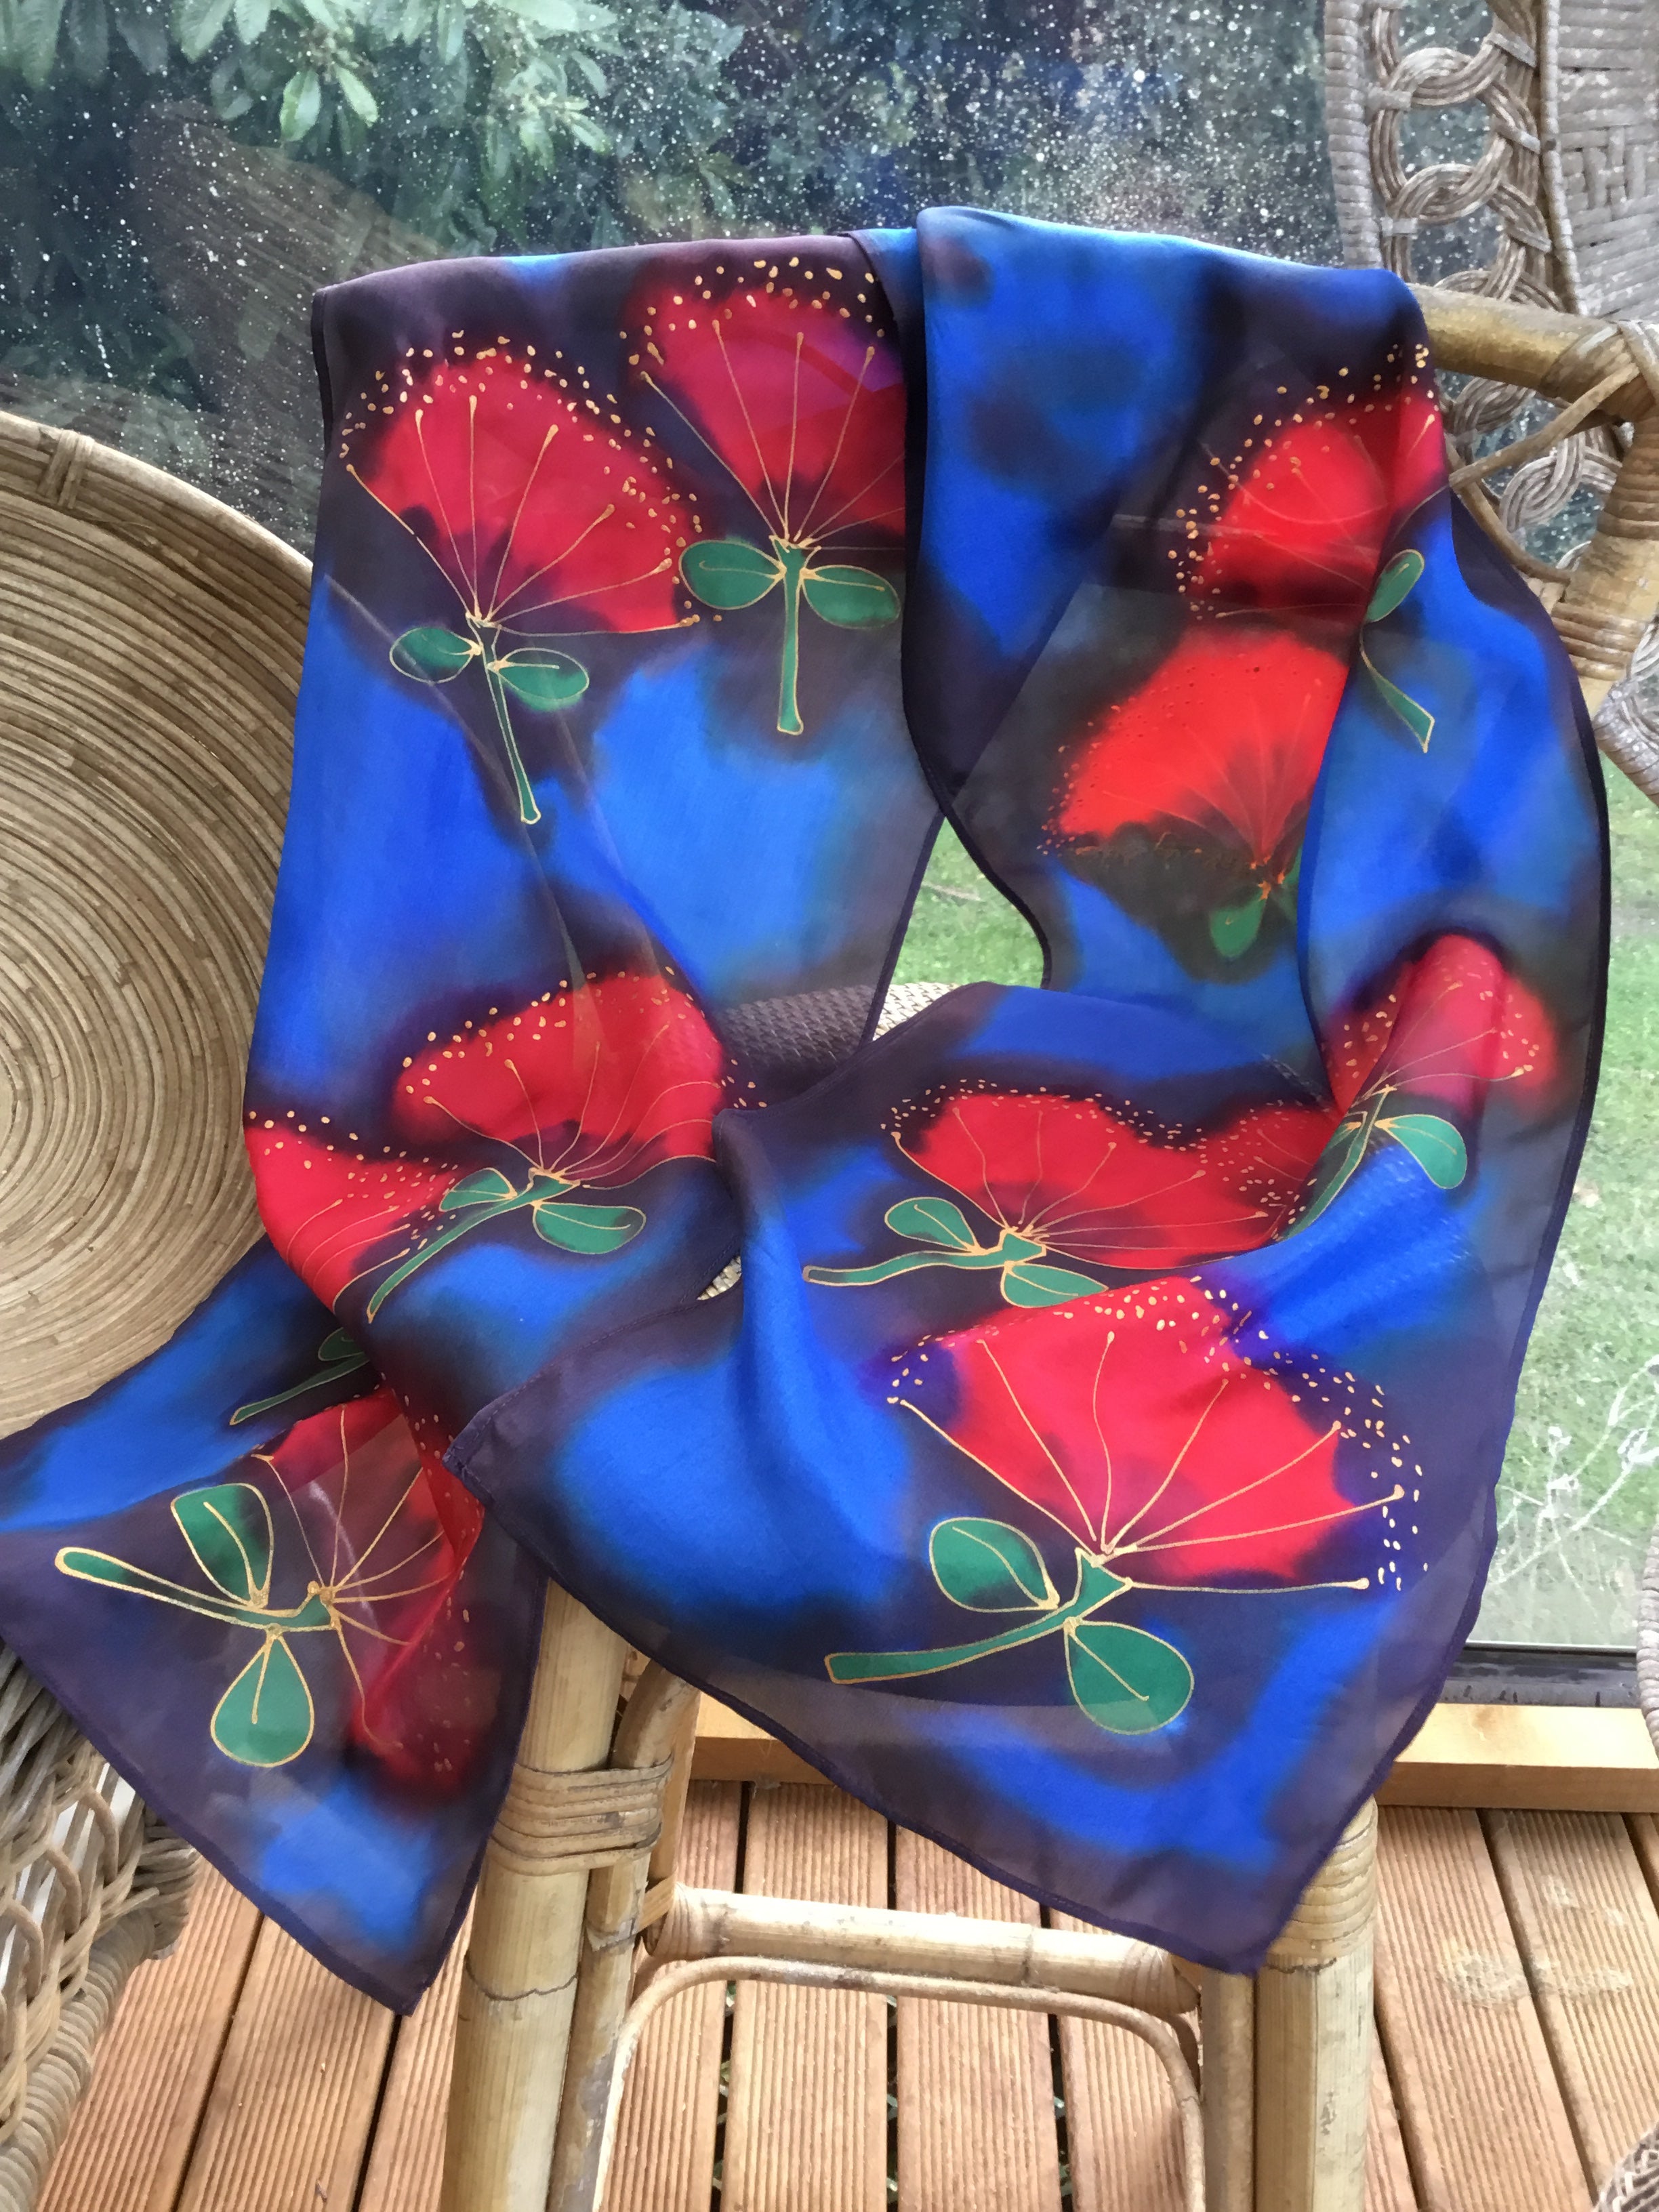 Pohutukawa, Red Flowers on Blue -  Hand painted Silk Scarf - Satherley Silks NZ